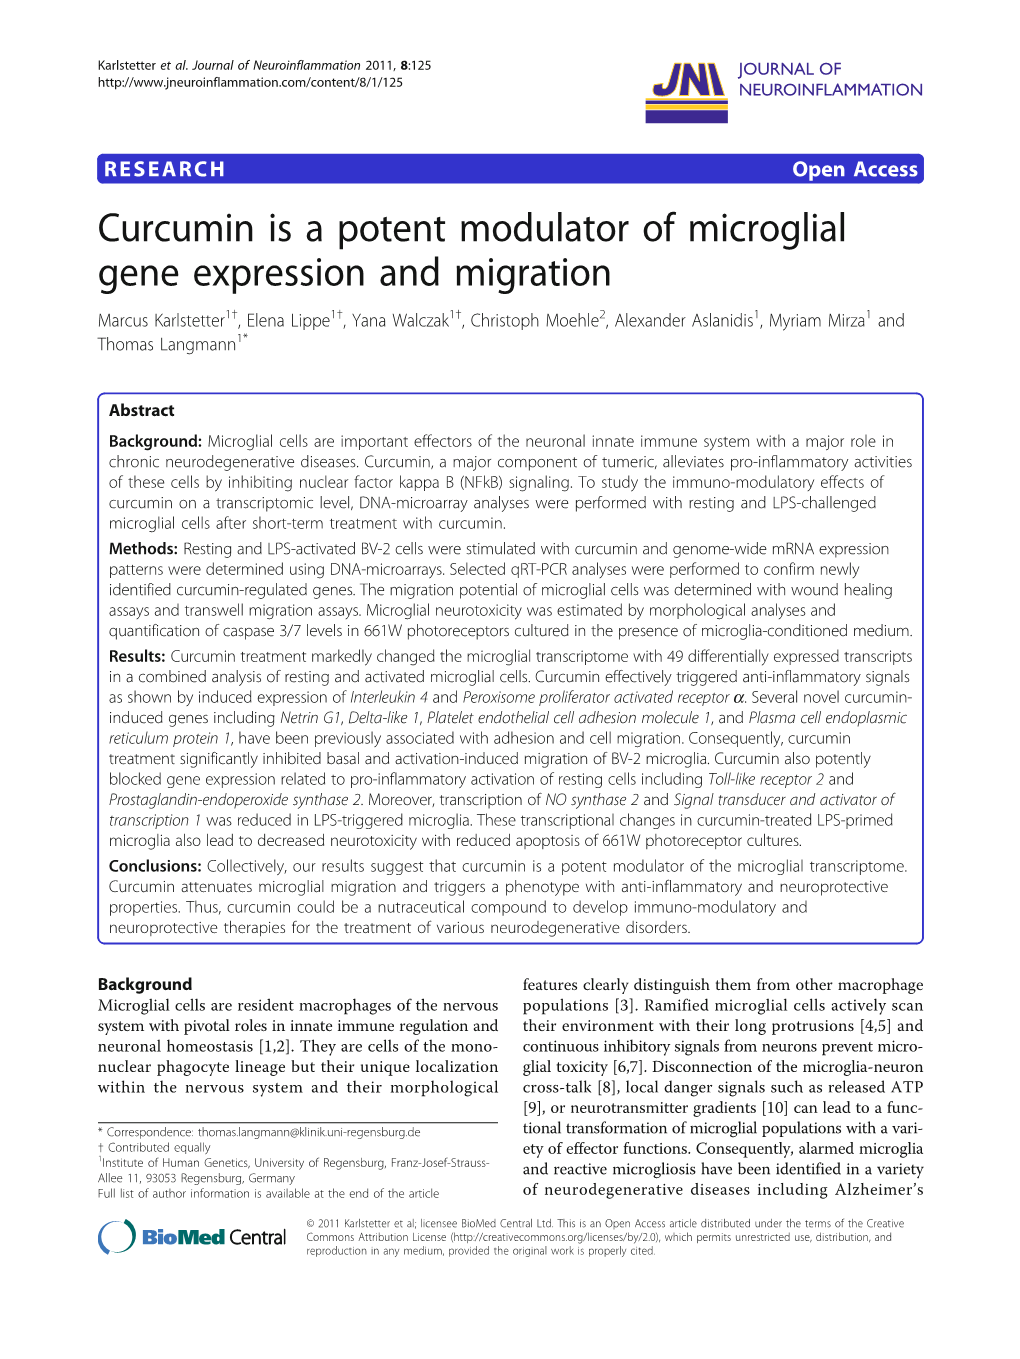 Curcumin Is a Potent Modulator of Microglial Gene Expression And